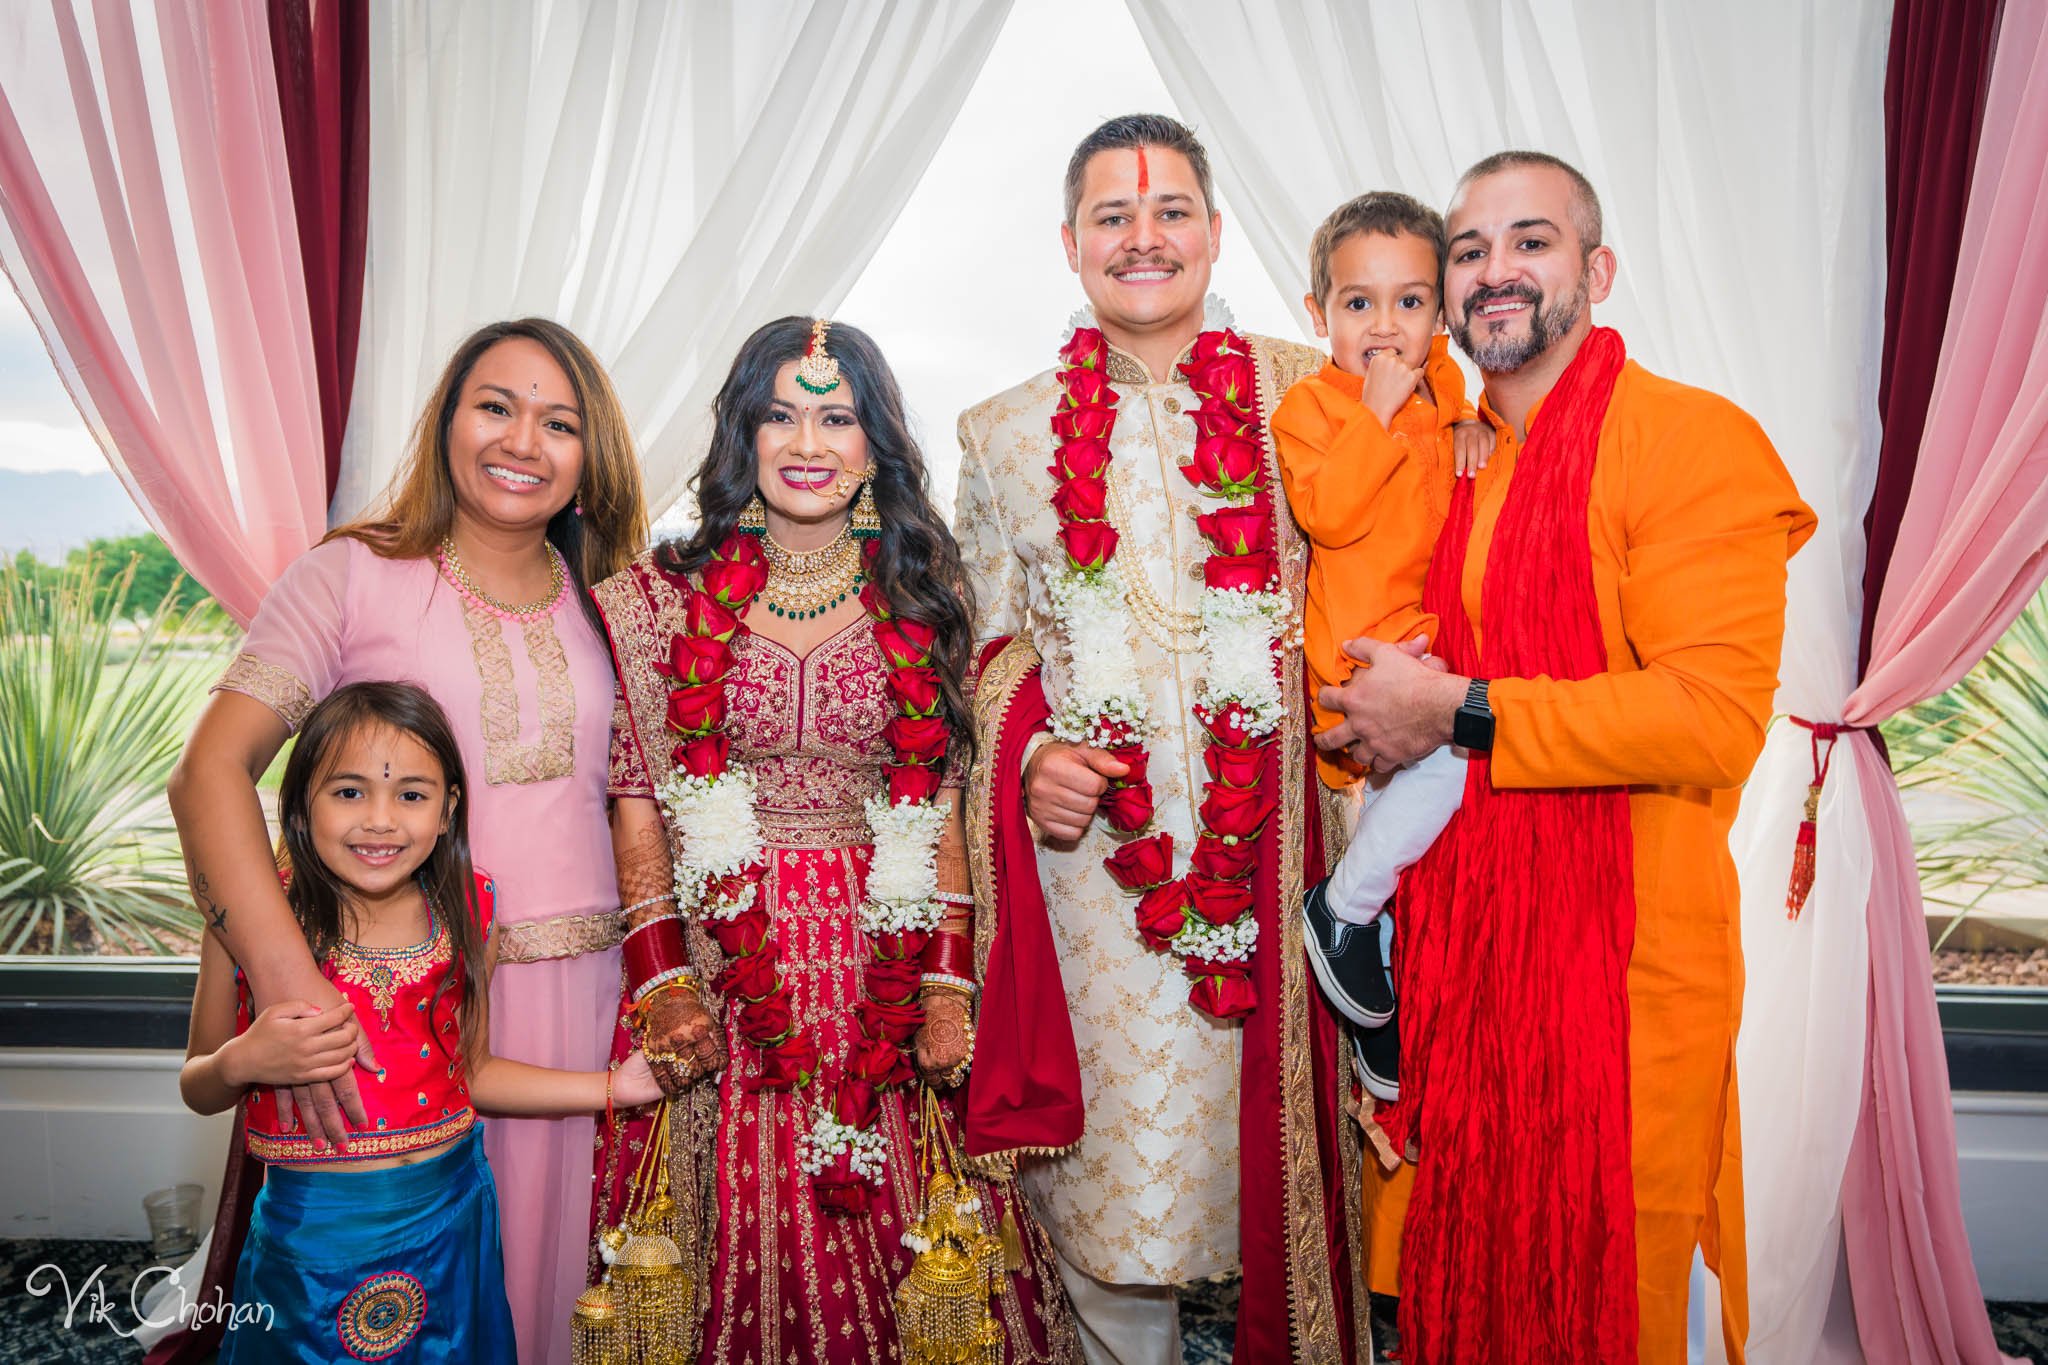 2022-06-09-Annie-&-Steven-Las-Vegas-Indian-Wedding-Ceremony-Photography-Vik-Chohan-Photography-Photo-Booth-Social-Media-VCP-212.jpg